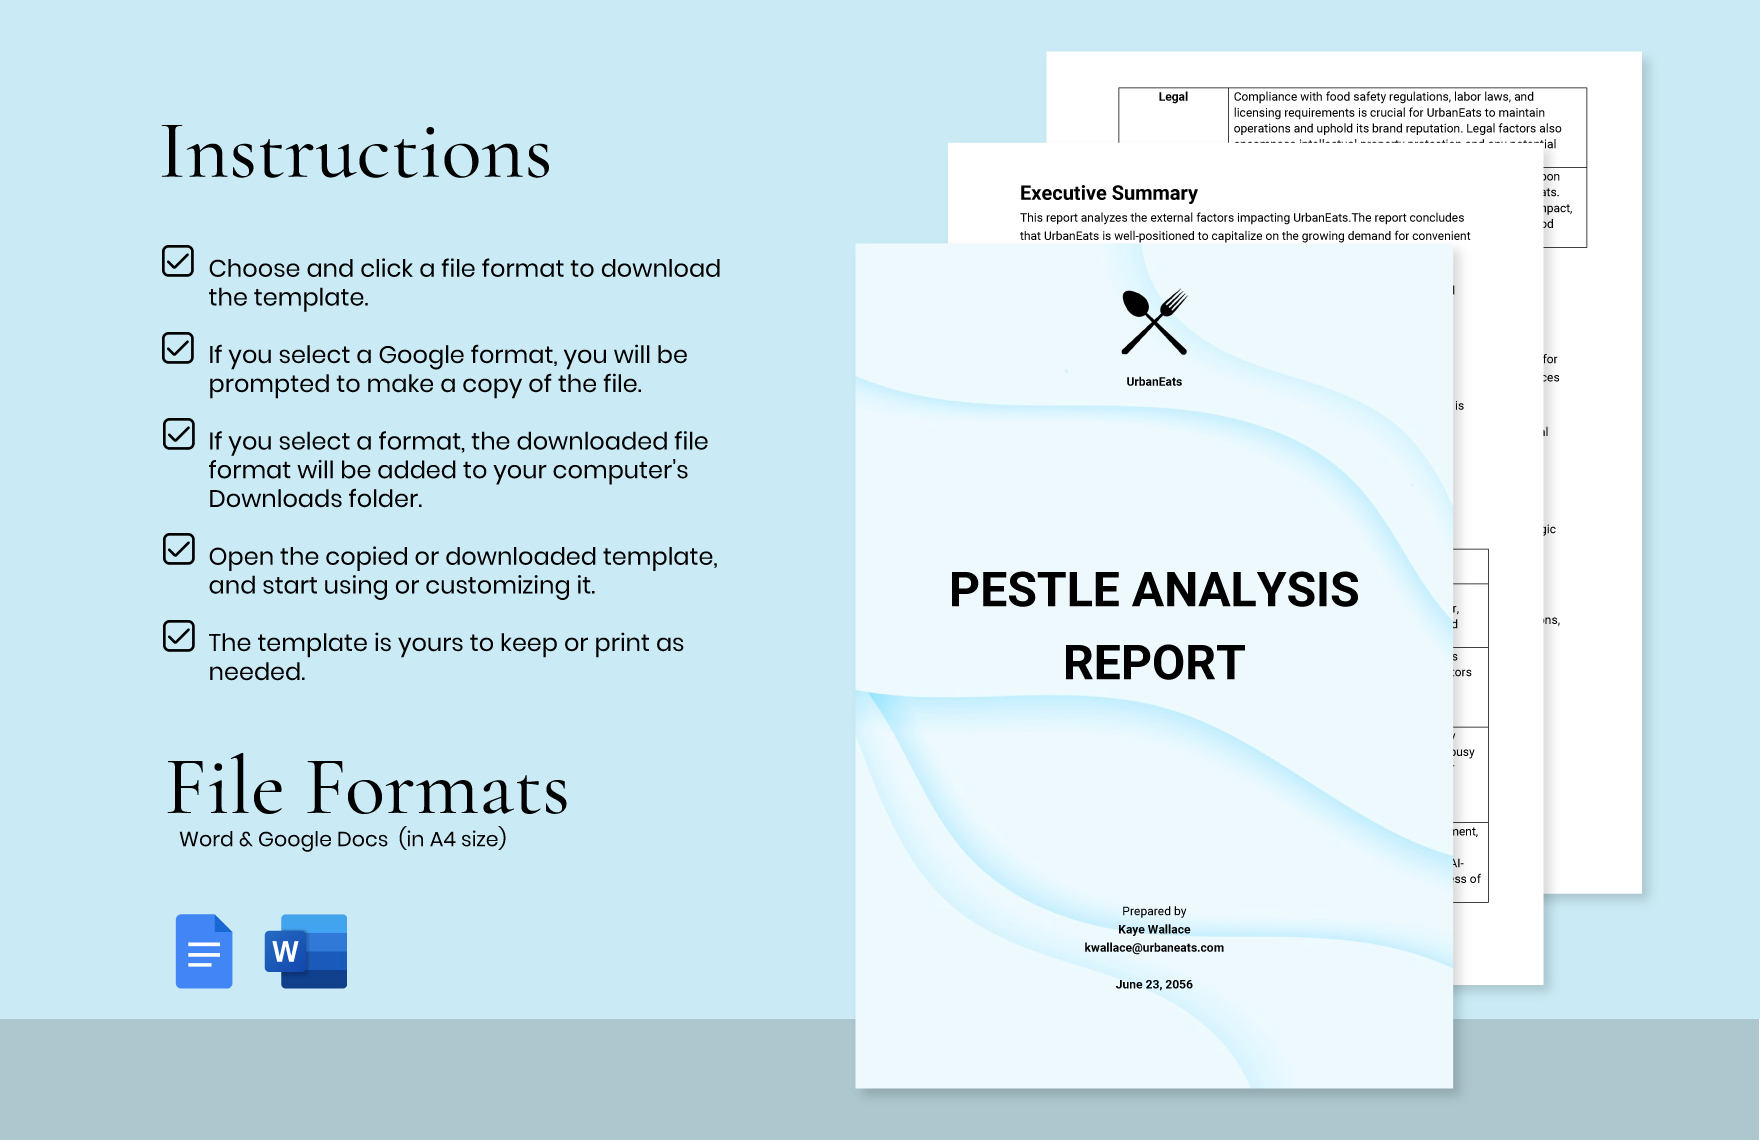 PESTLE Analysis Report Template